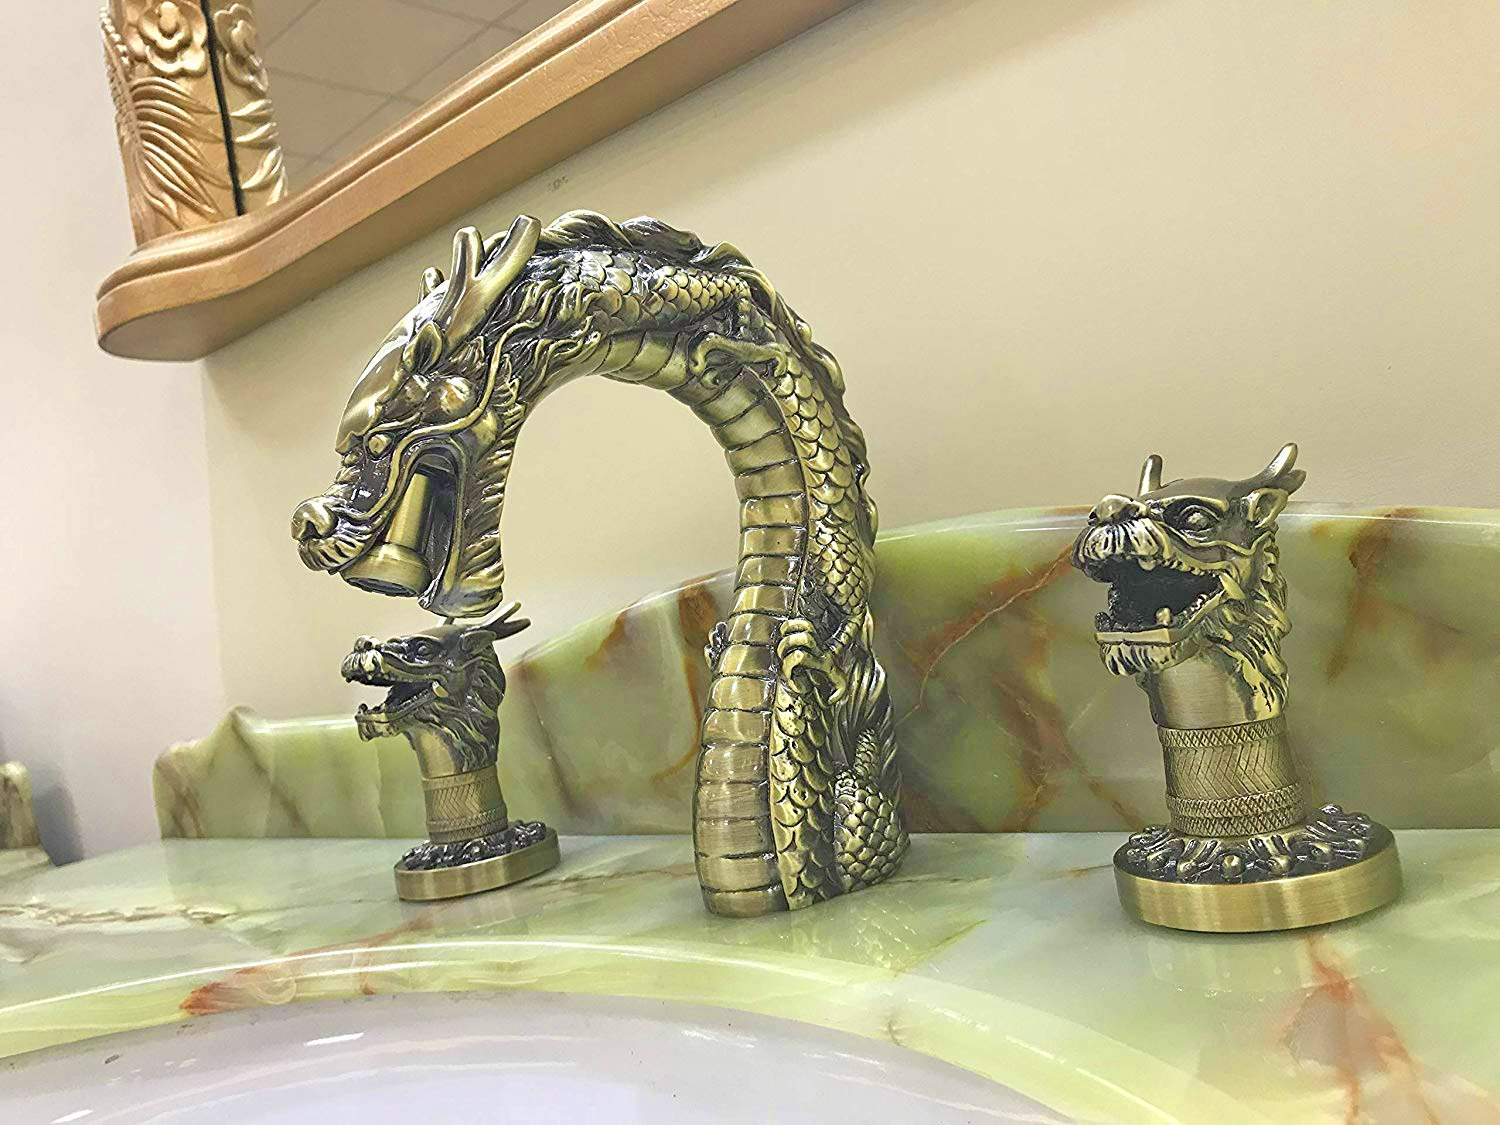 Dragon Faucet - Luxurious Dragon Bathroom Fixture